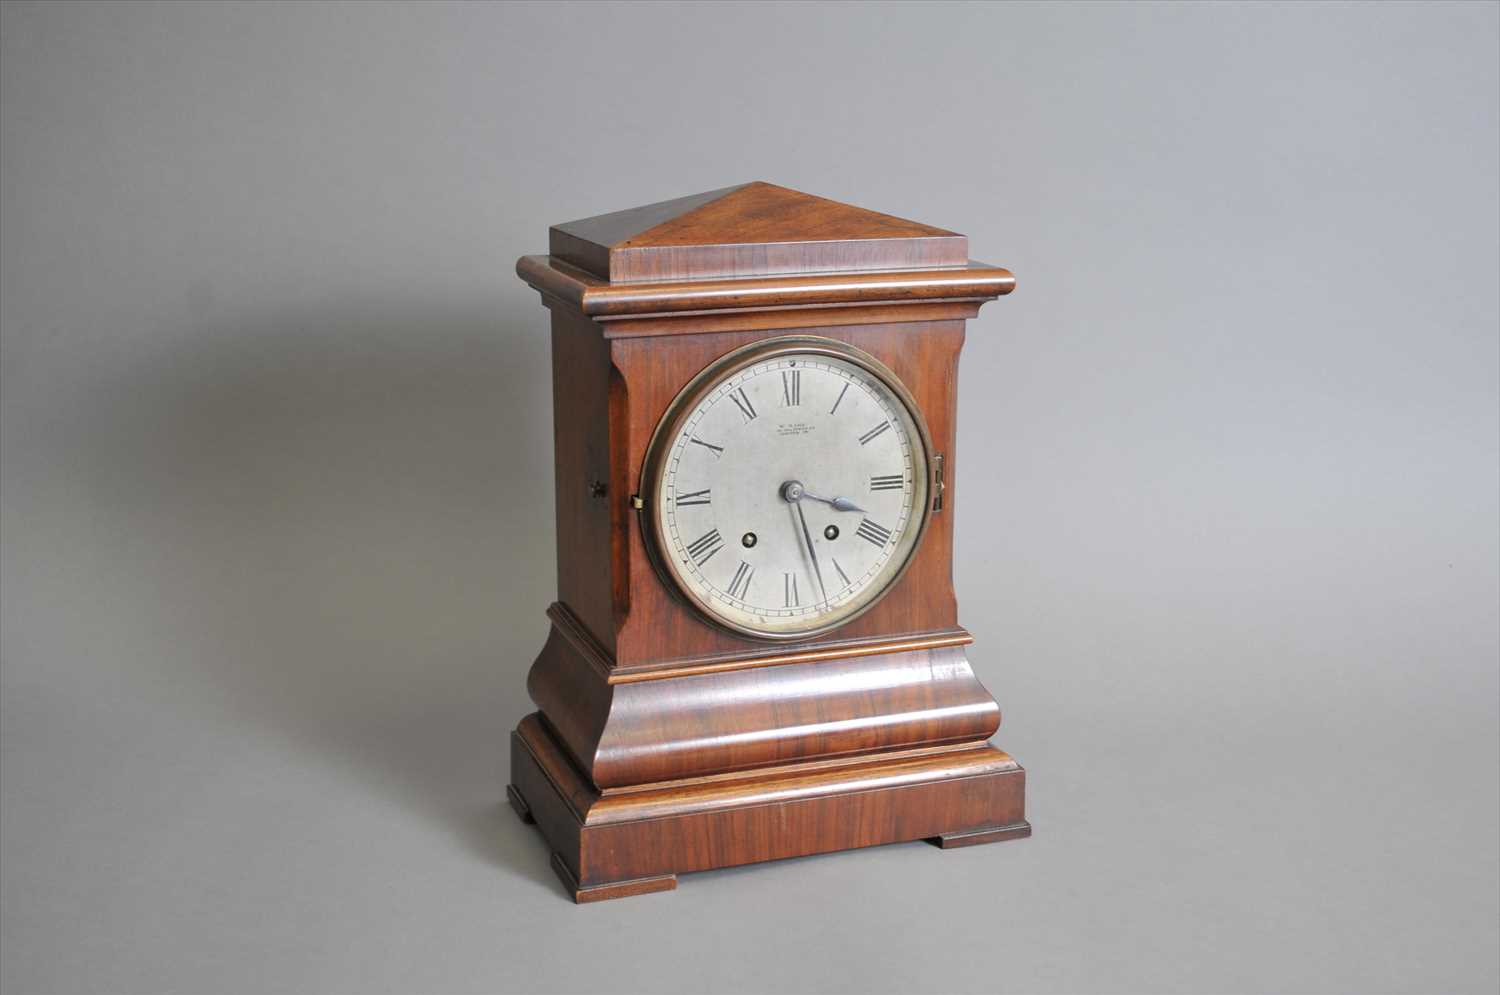 Lot 685 - A 19th century mahogany cased mantle clock, W. Mahr, 90 Bolsover St, London, lenzkirch